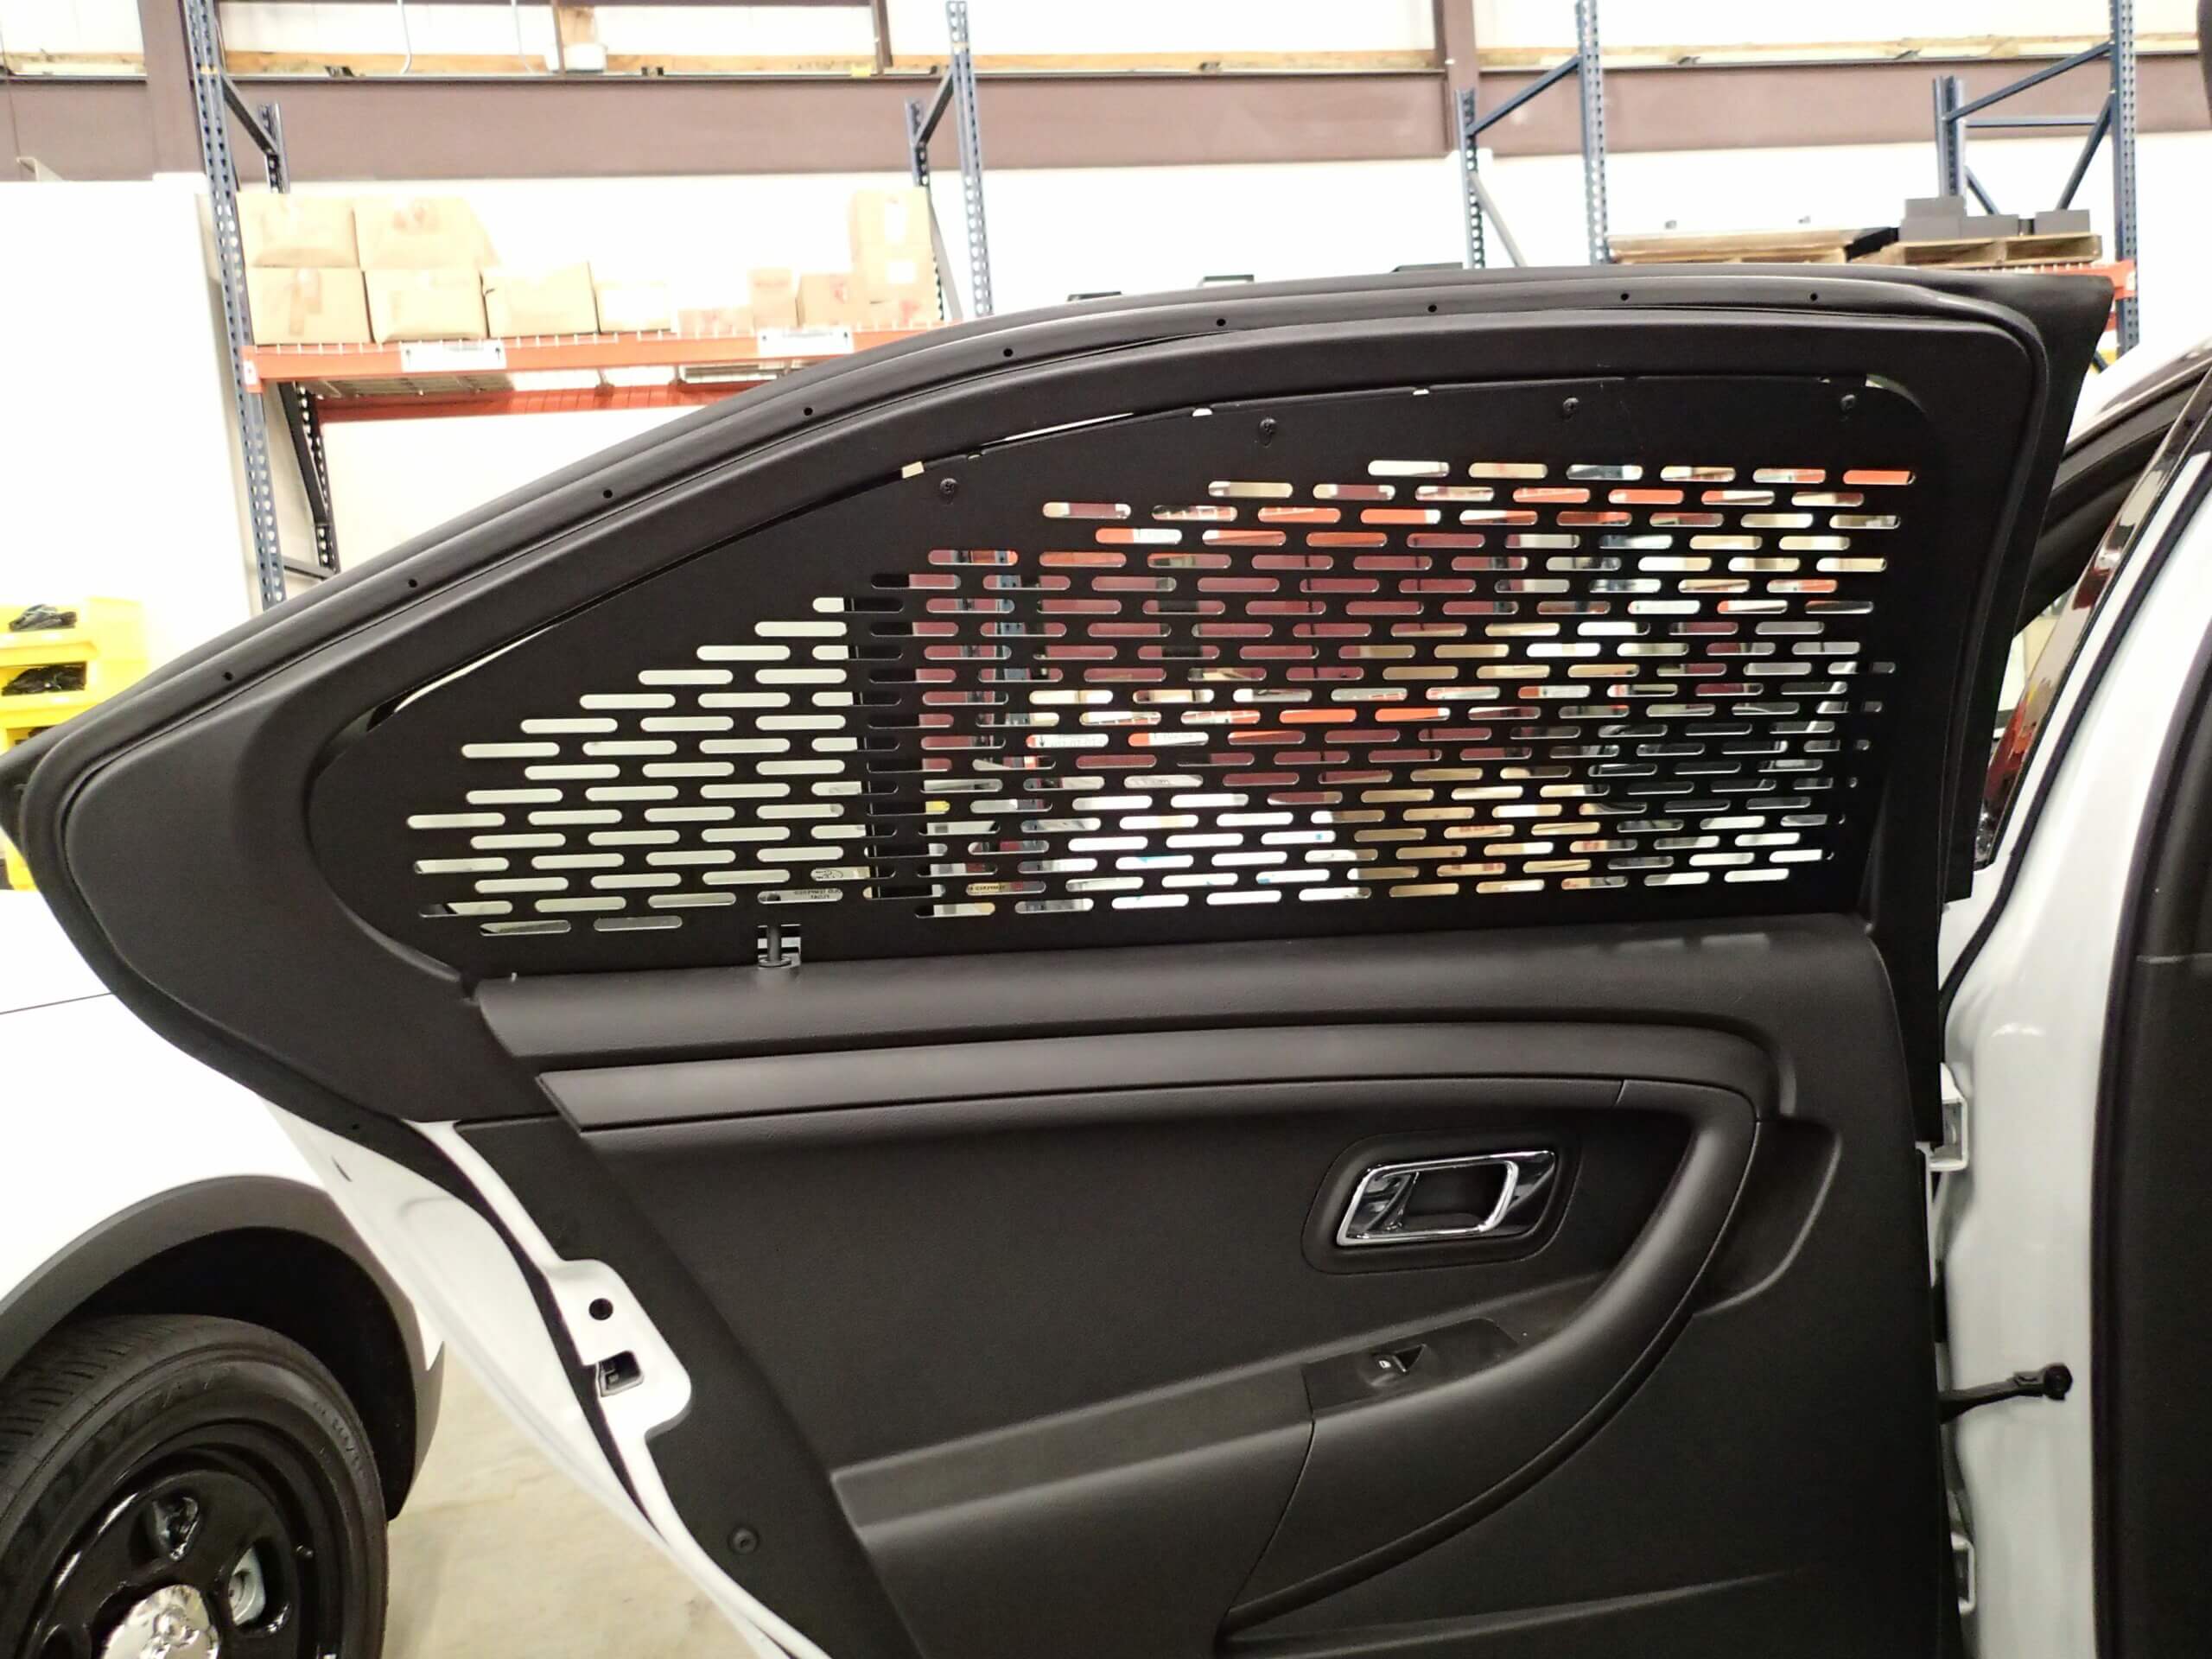 DISCONTINUED – 2013-2019 Ford Interceptor Sedan Window guard interior for 2 windows